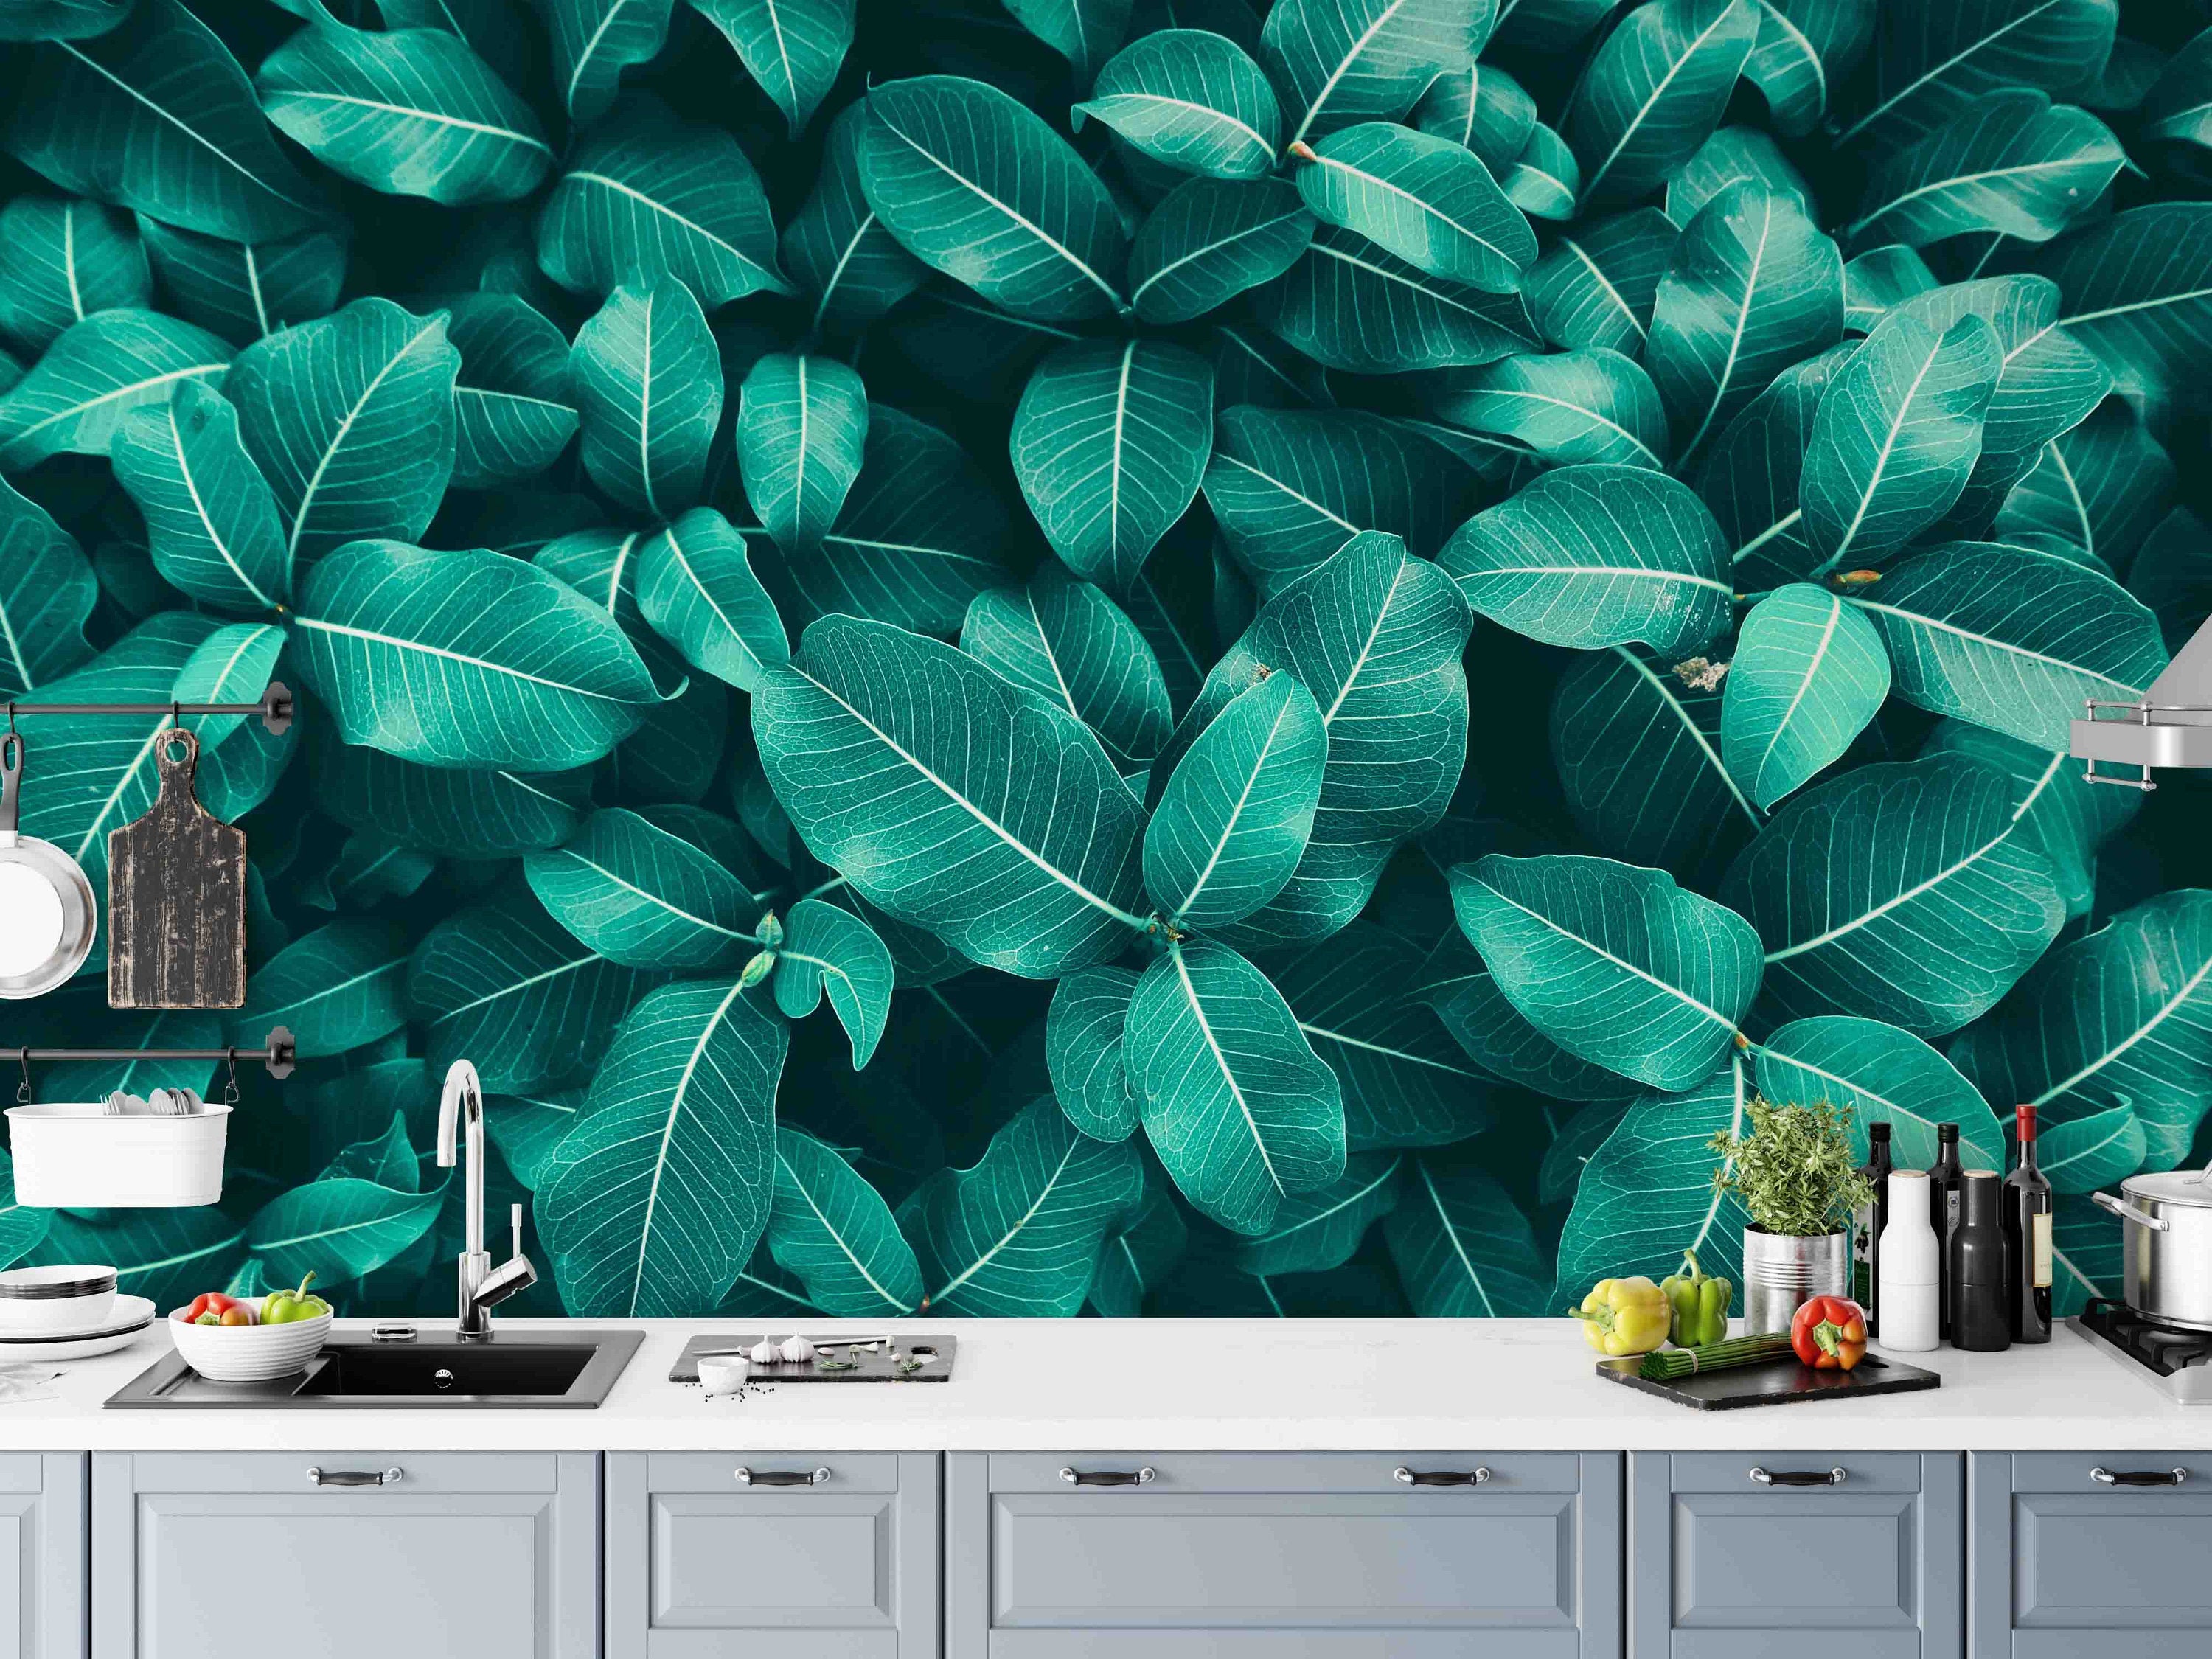 Blue Green Tone Leaves Modern Design Background Wallpaper Restaurant Living Room Cafe Office Bedroom Mural Home Wall Art Removable